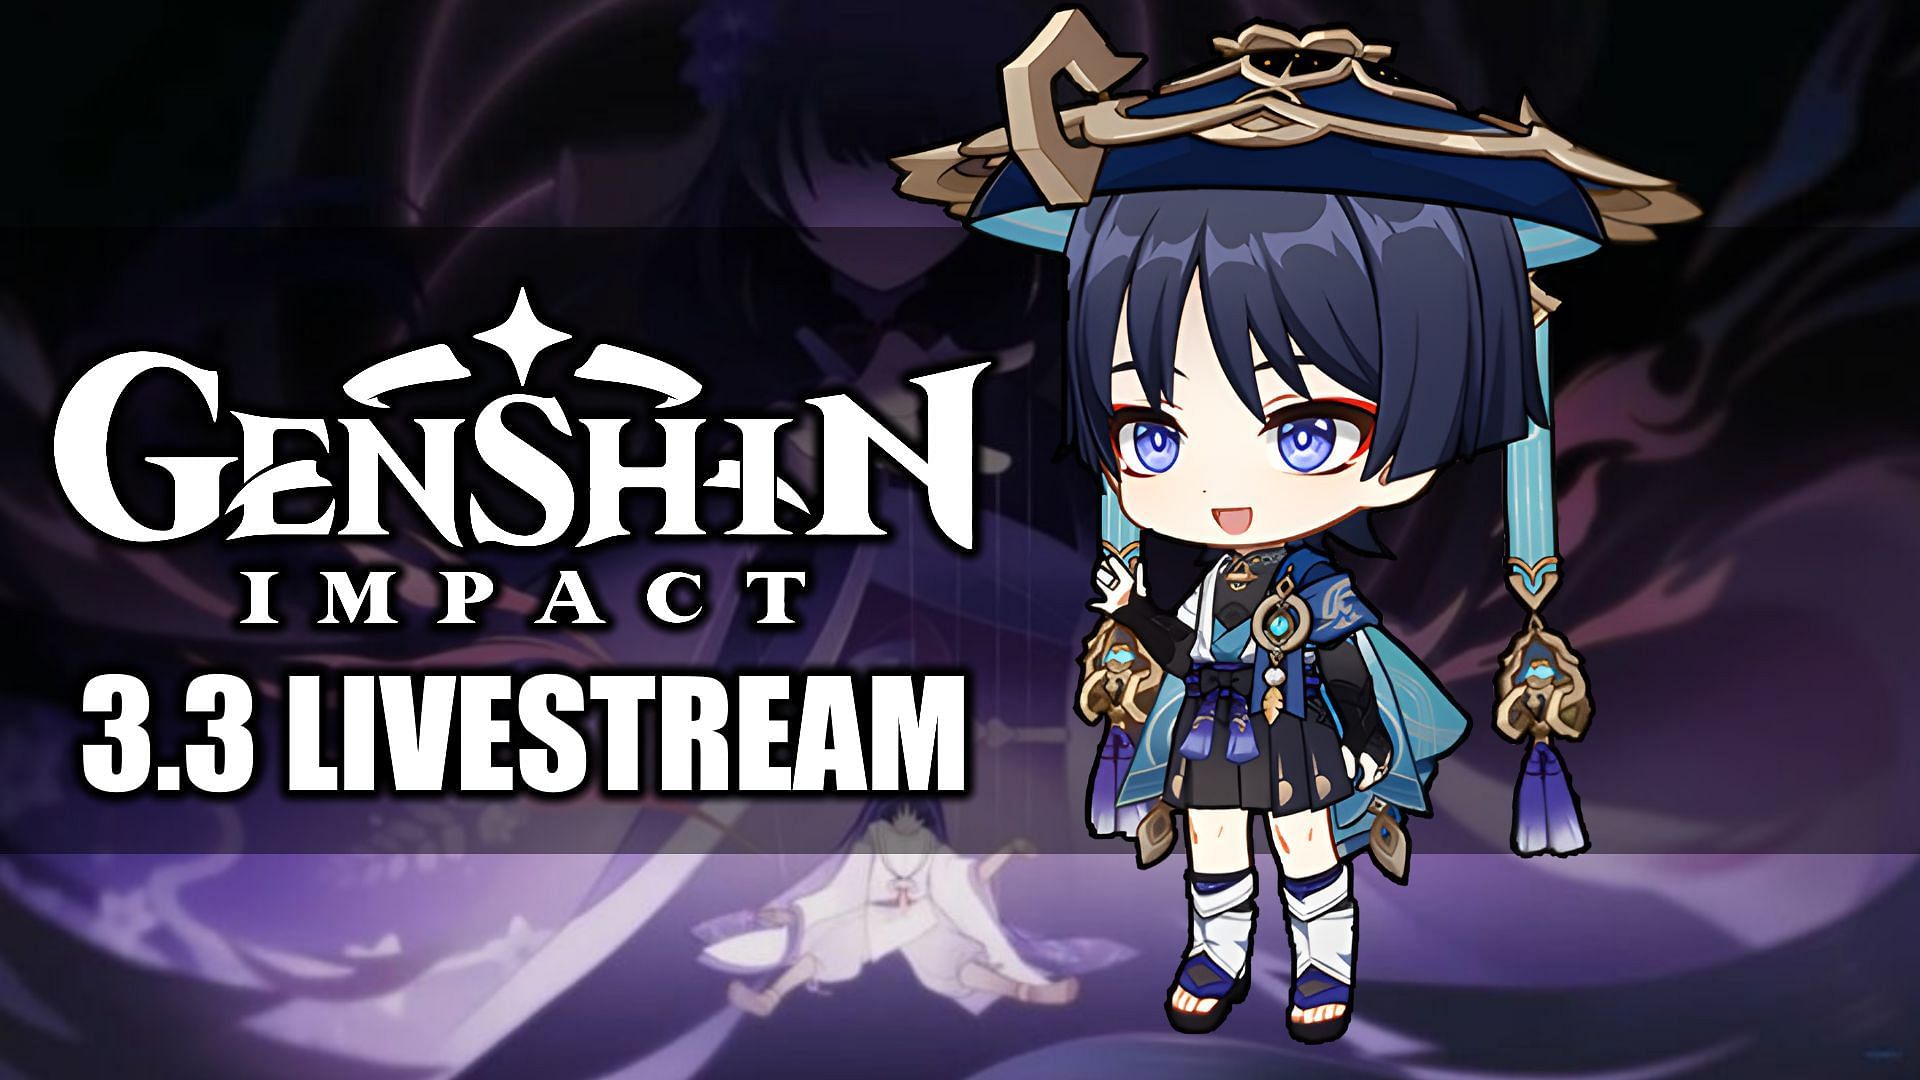 Genshin Impact 3.3 Livestream and Special Program Summary